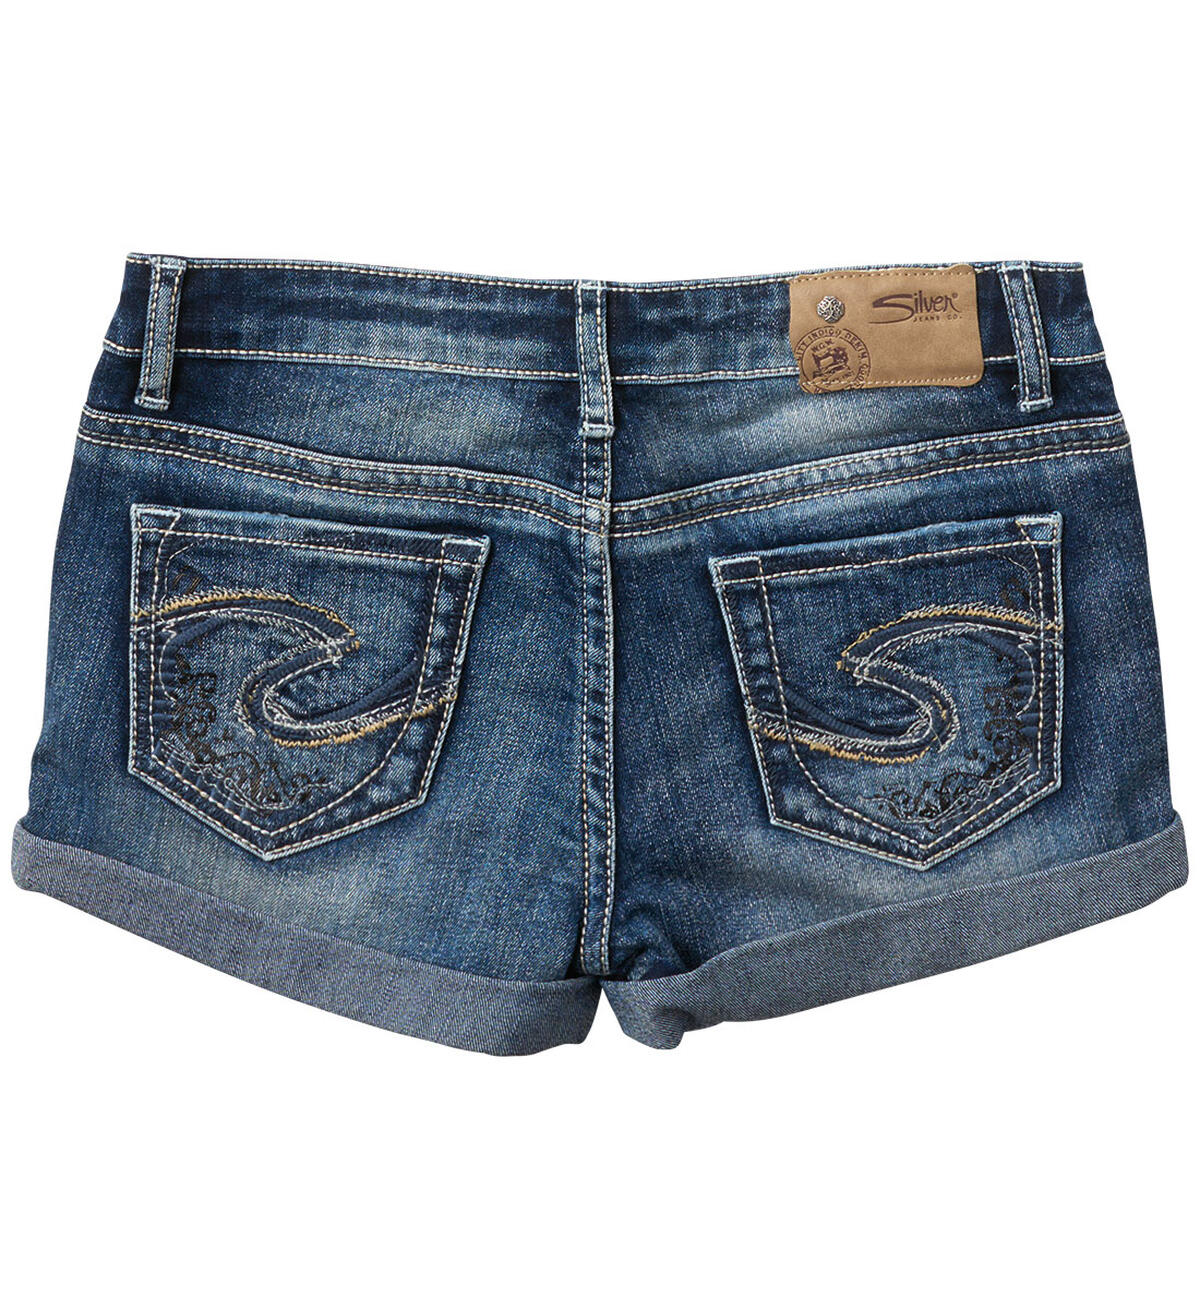 Lacy Cuffed Denim Shorts in Medium Wash (7-16), , hi-res image number 1